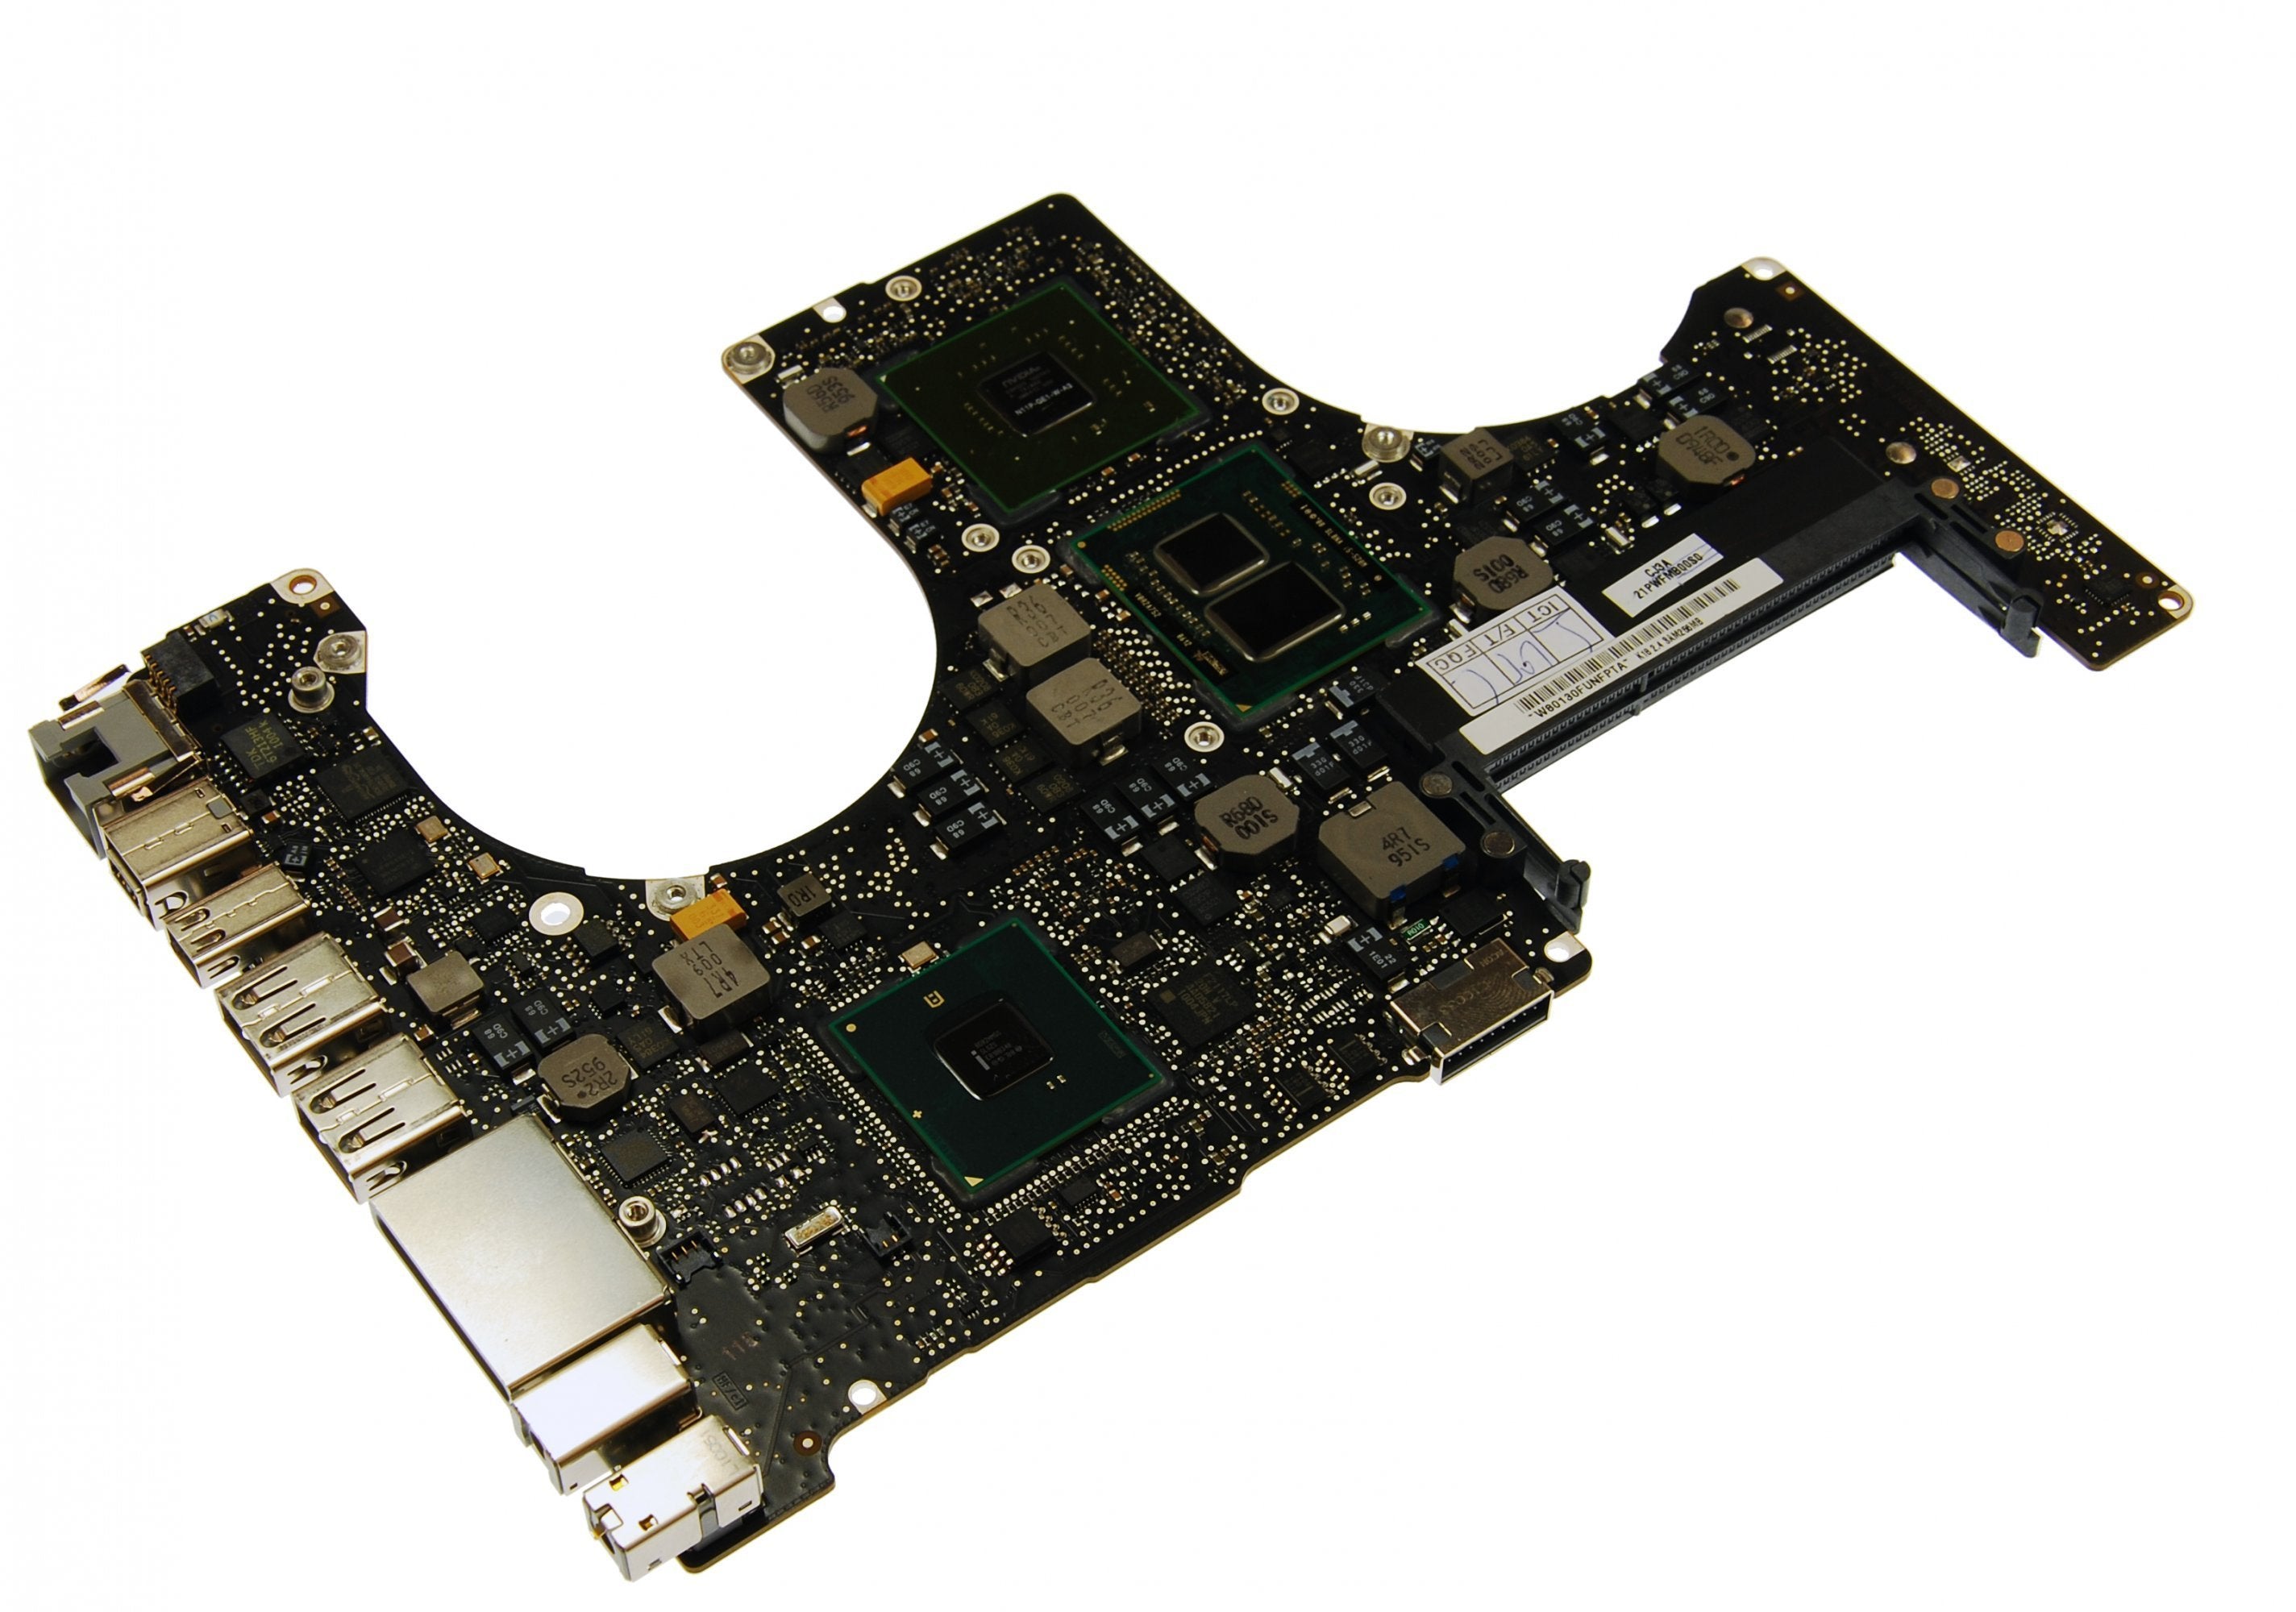 MacBook Pro 15" Unibody (Mid 2010) 2.53 GHz Logic Board